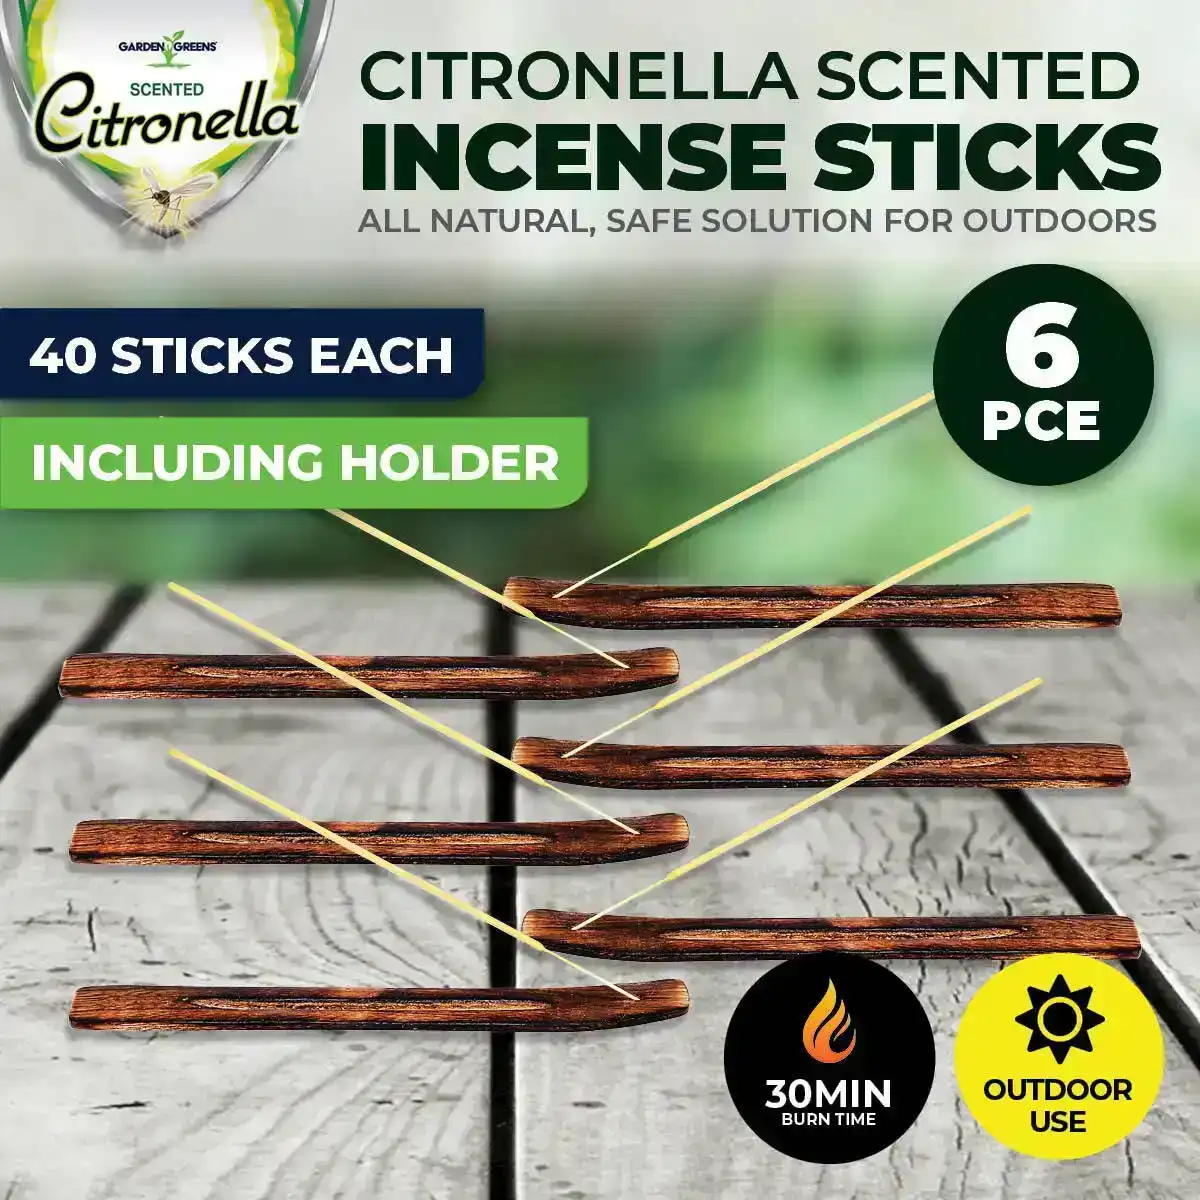 Garden Greens® 6PCE Citronella Scented Incense Sticks & Wooden Holders